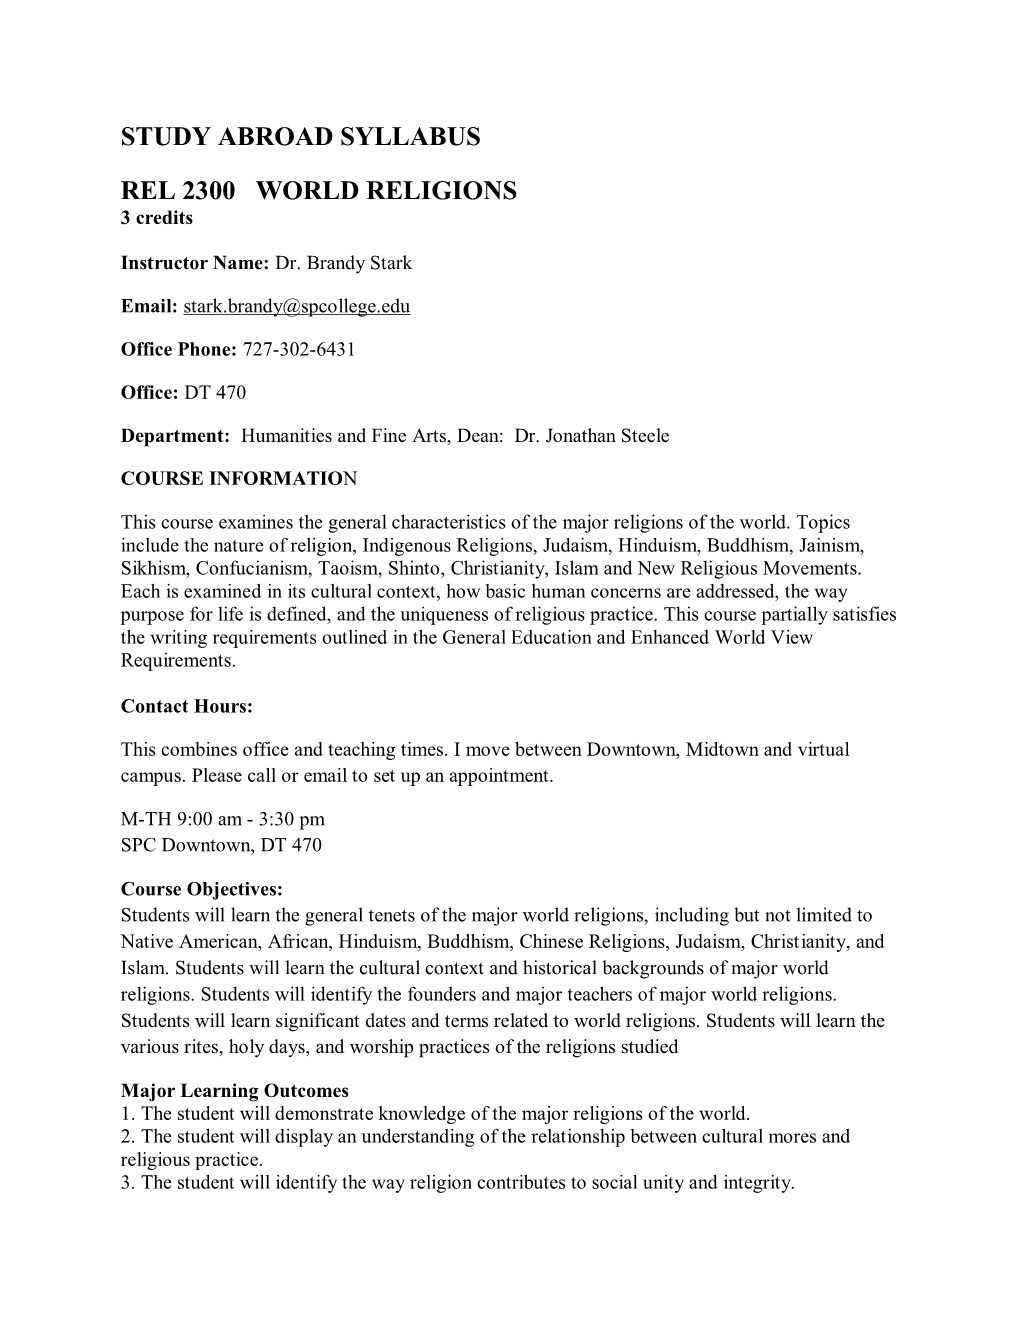 Study Abroad Syllabus Rel 2300 World Religions